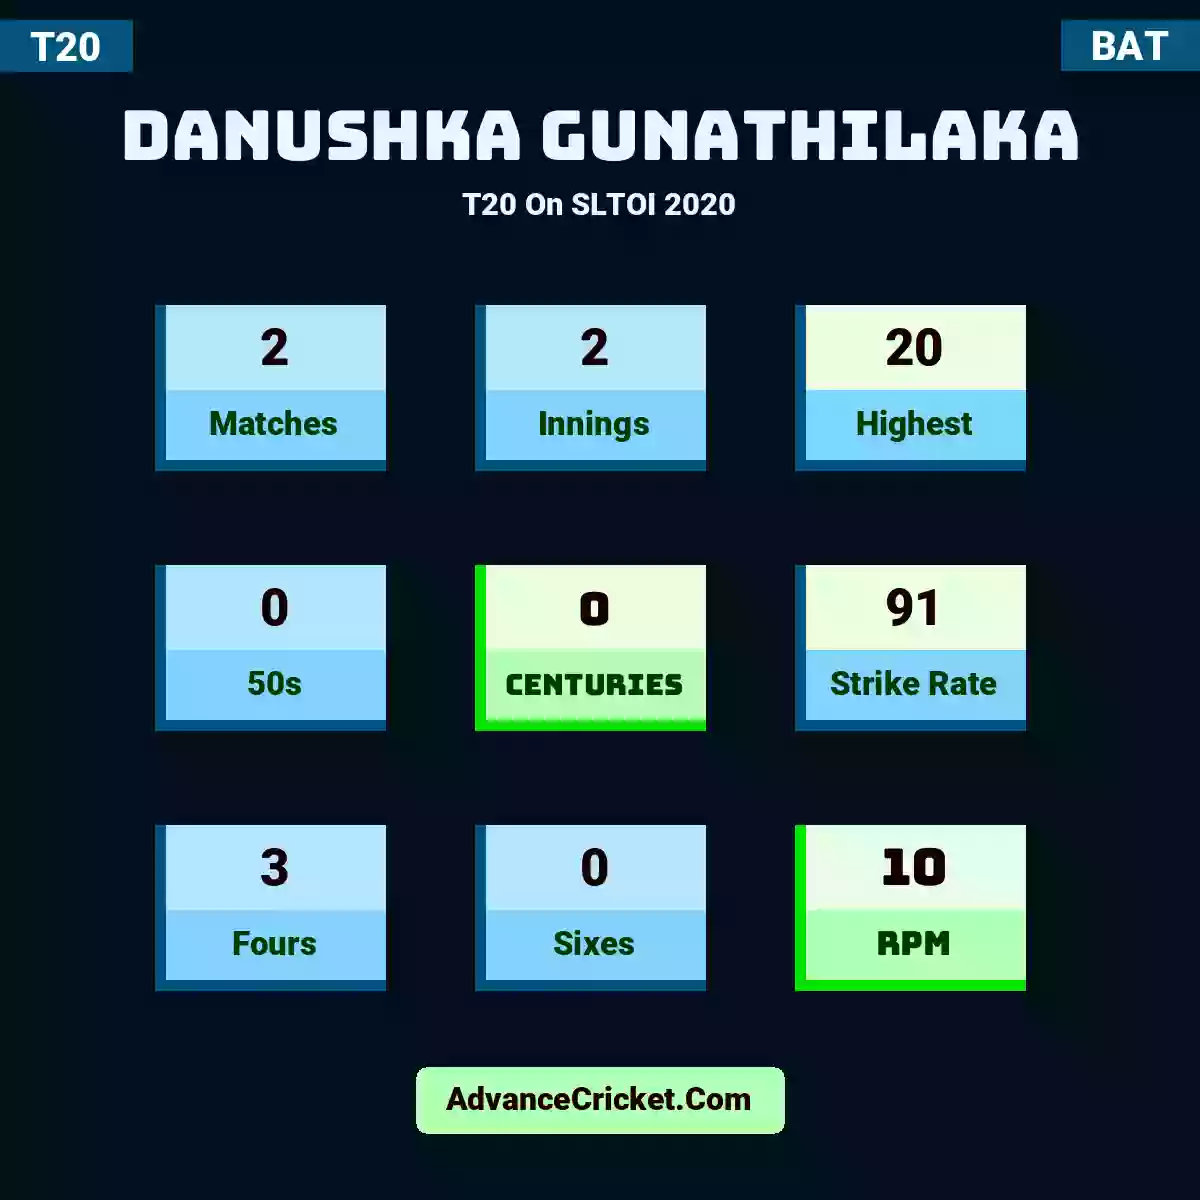 Danushka Gunathilaka T20  On SLTOI 2020, Danushka Gunathilaka played 2 matches, scored 20 runs as highest, 0 half-centuries, and 0 centuries, with a strike rate of 91. D.Gunathilaka hit 3 fours and 0 sixes, with an RPM of 10.